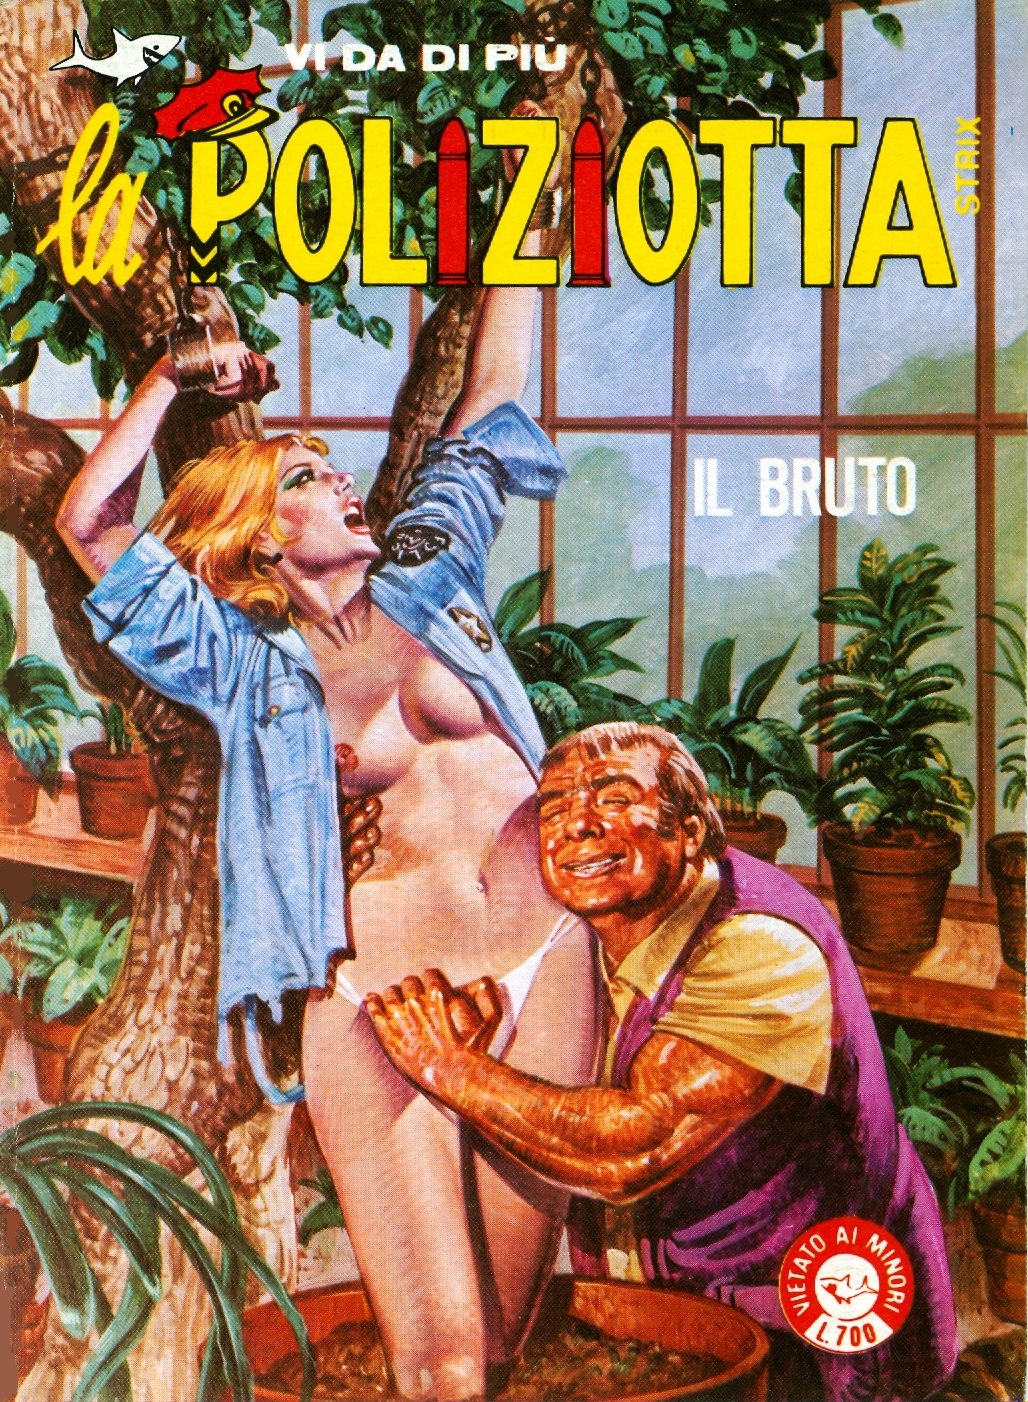 комиксы италия эротика фото 111